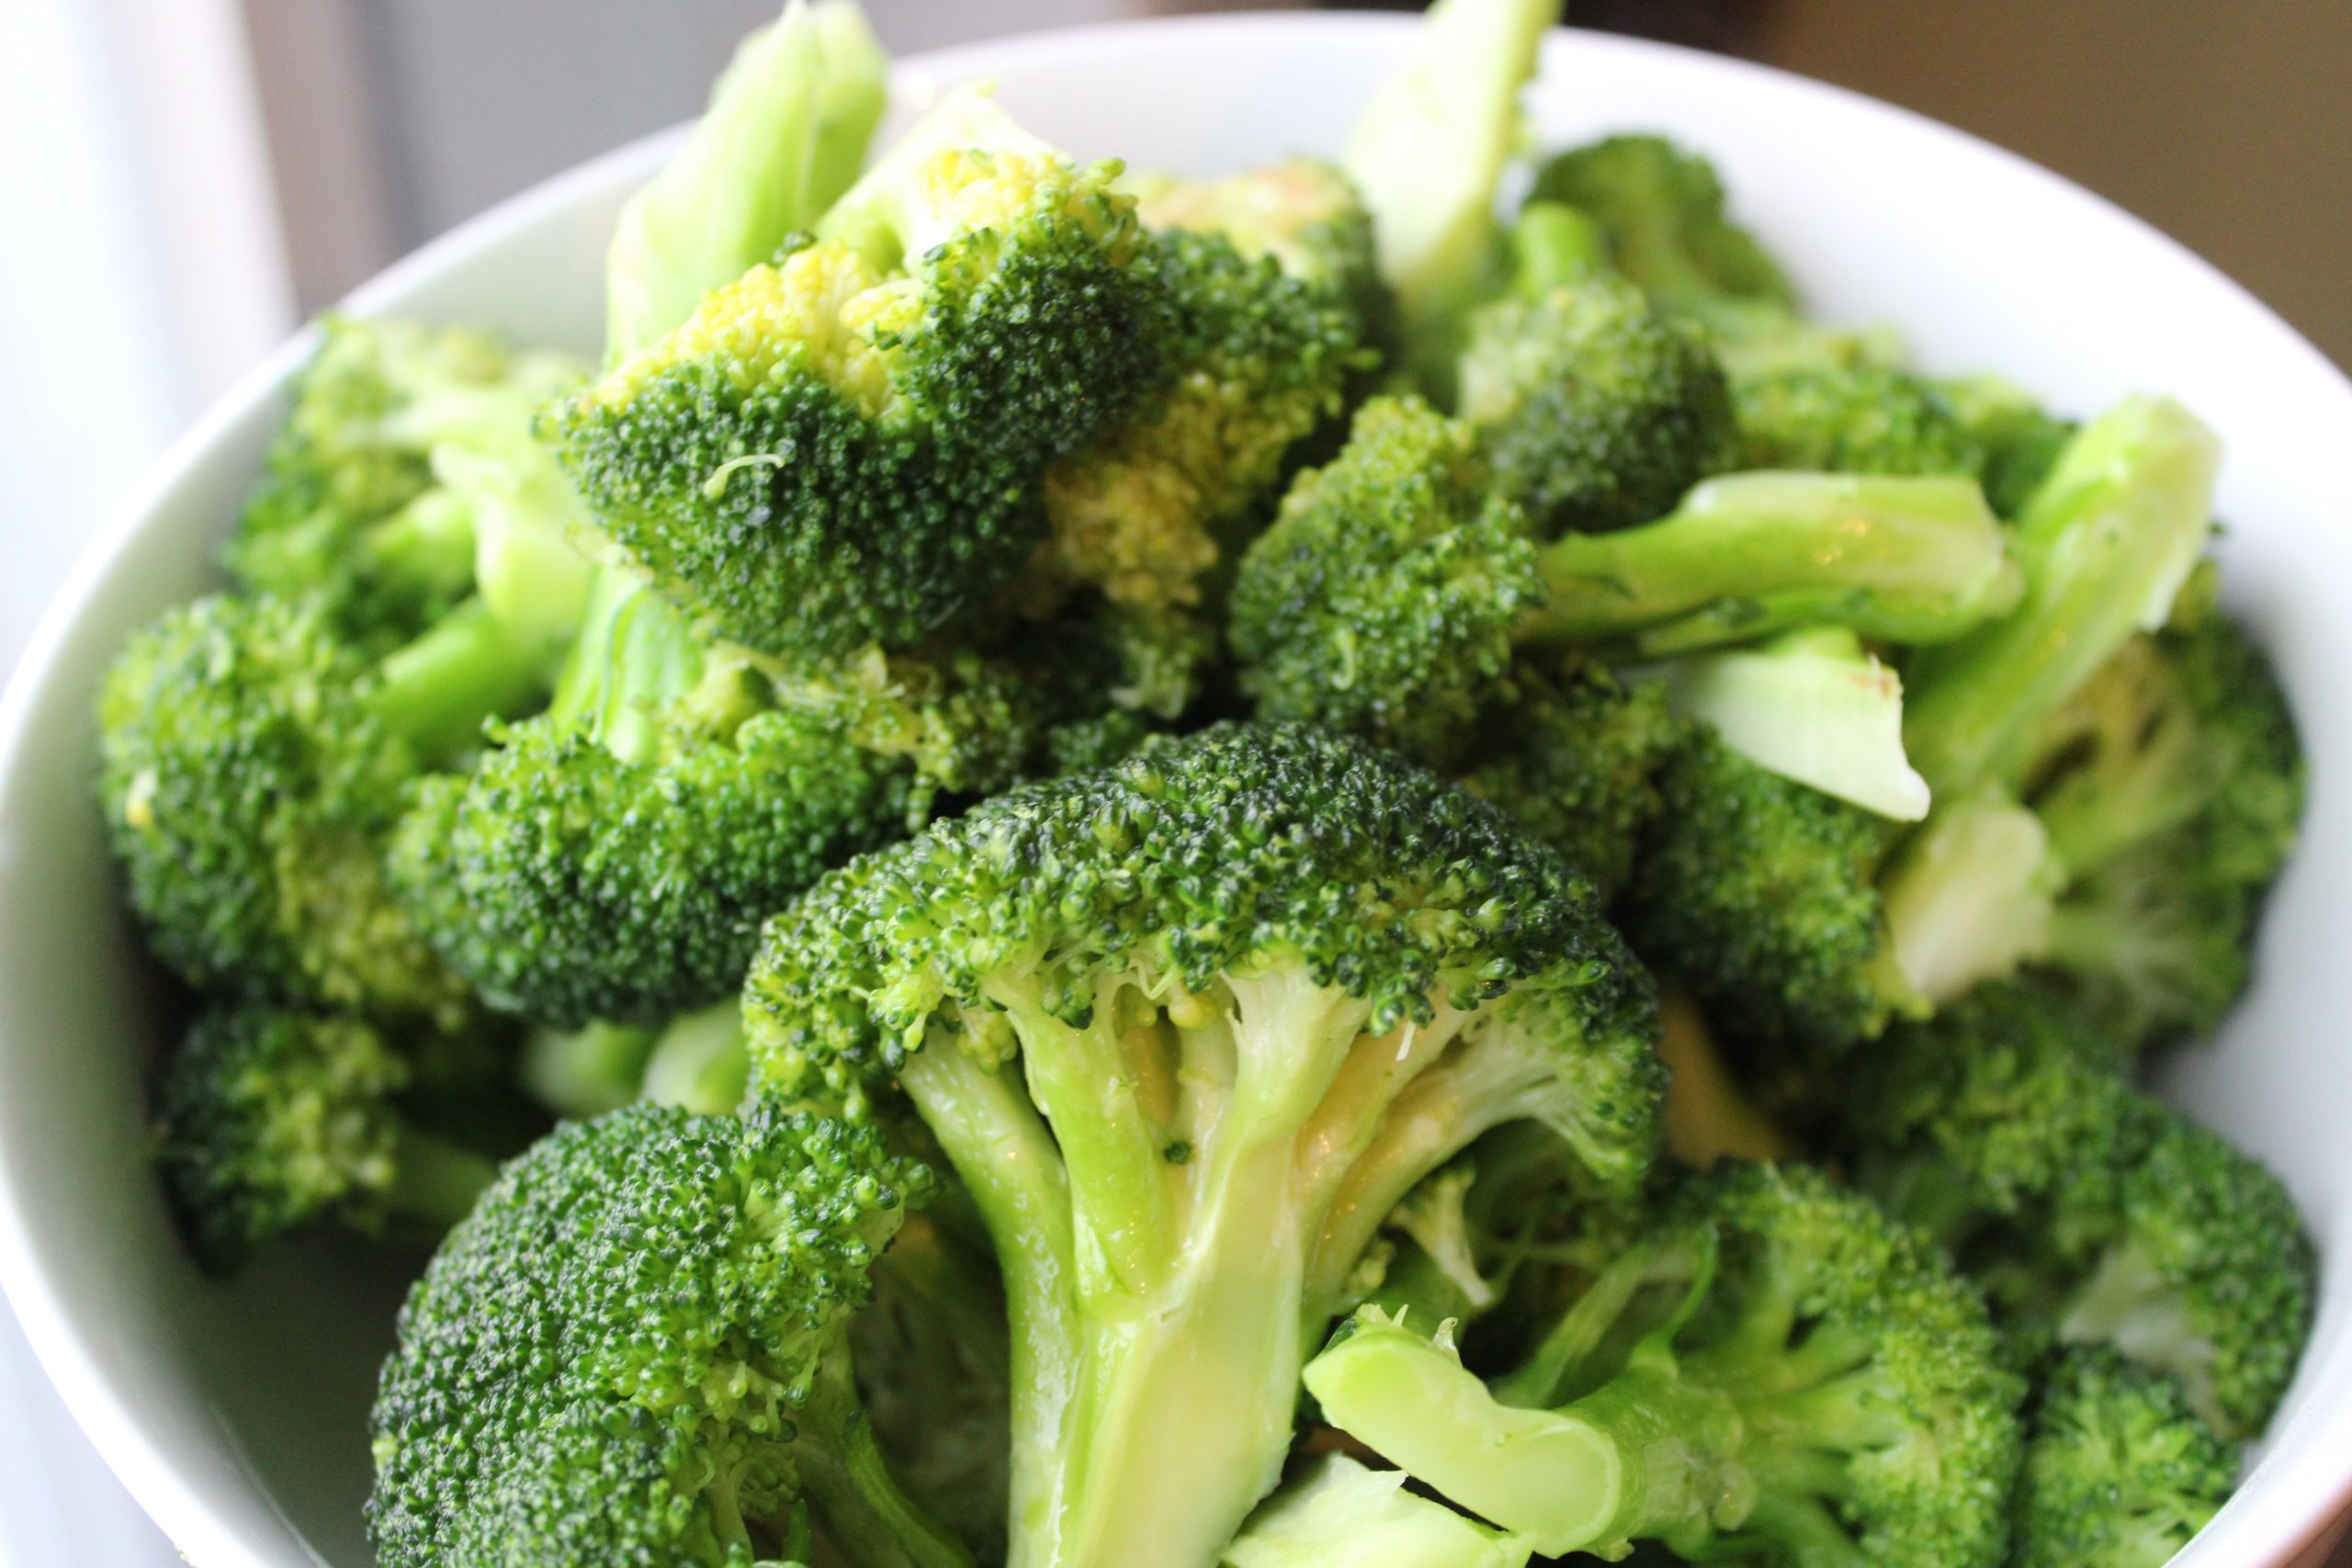 Do Broccoli Seeds Need Light To Germinate?